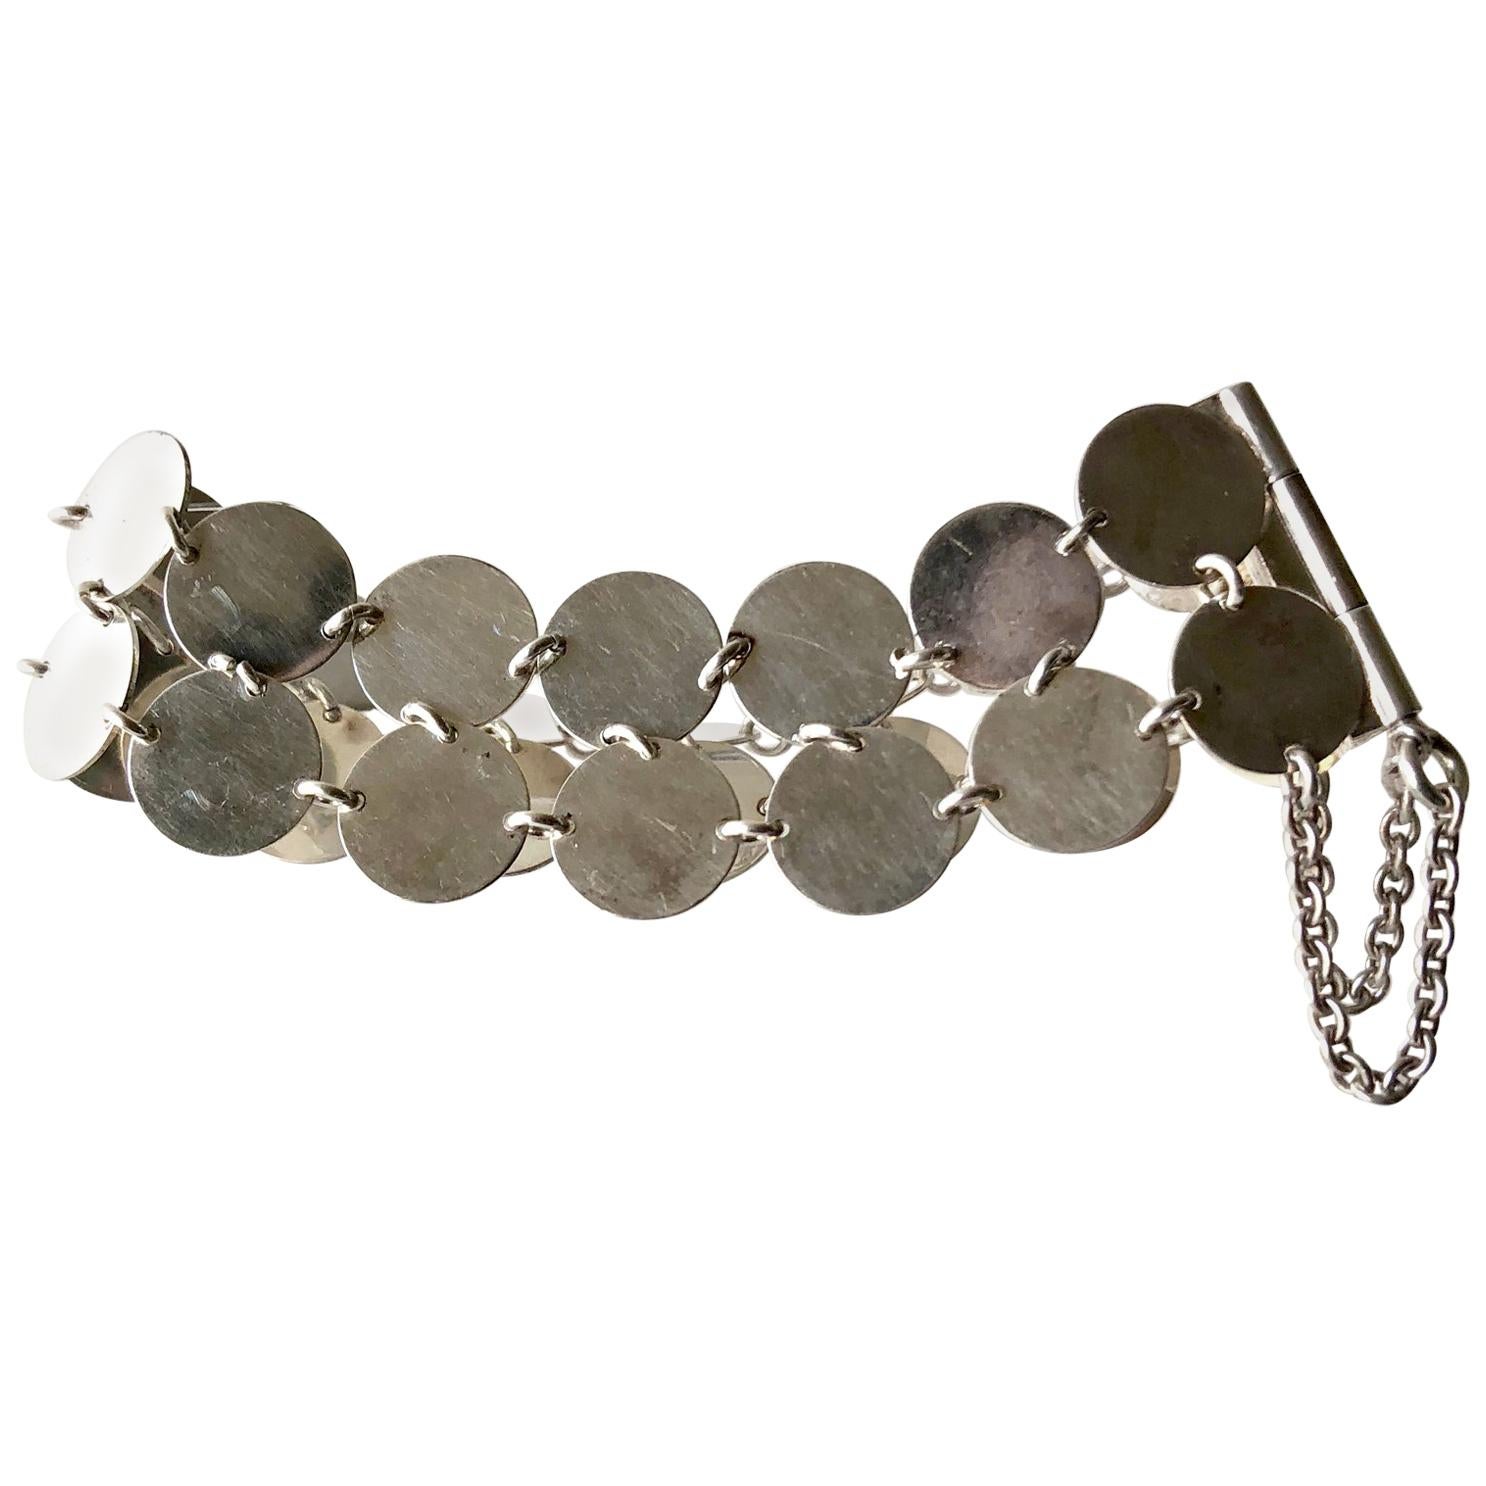 Rare Kalevala Koru Sterling Silver Finnish Modernist Chain Maille Bracelet 1968